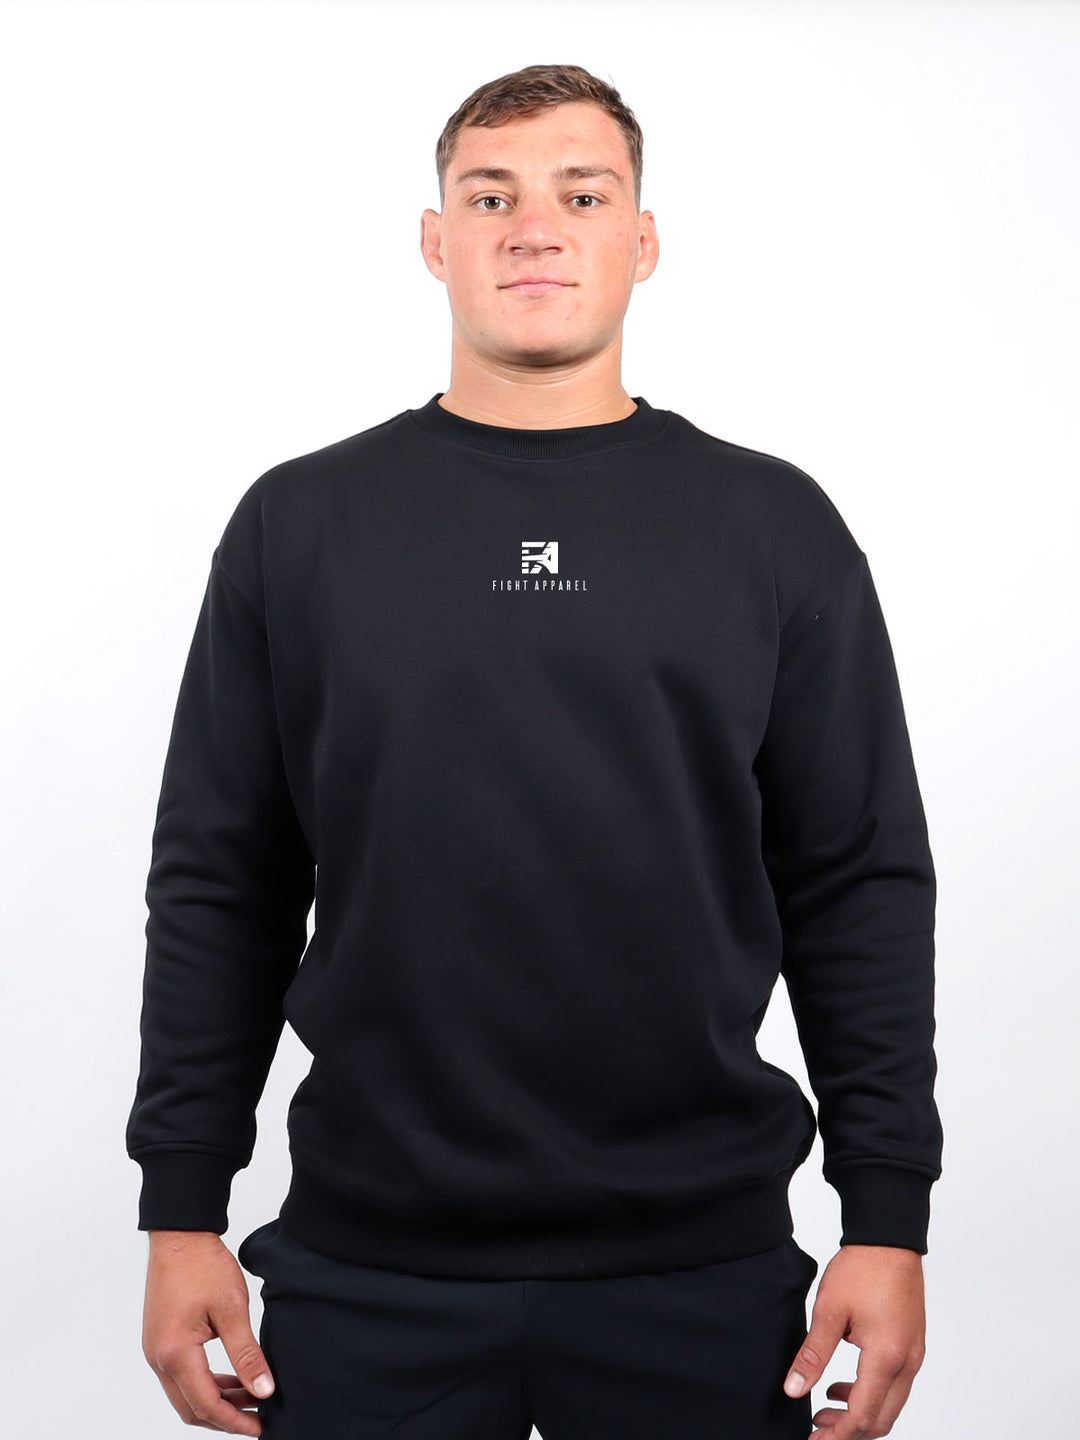 FA - Lifestyle V2.0 - Sweatshirt – Men